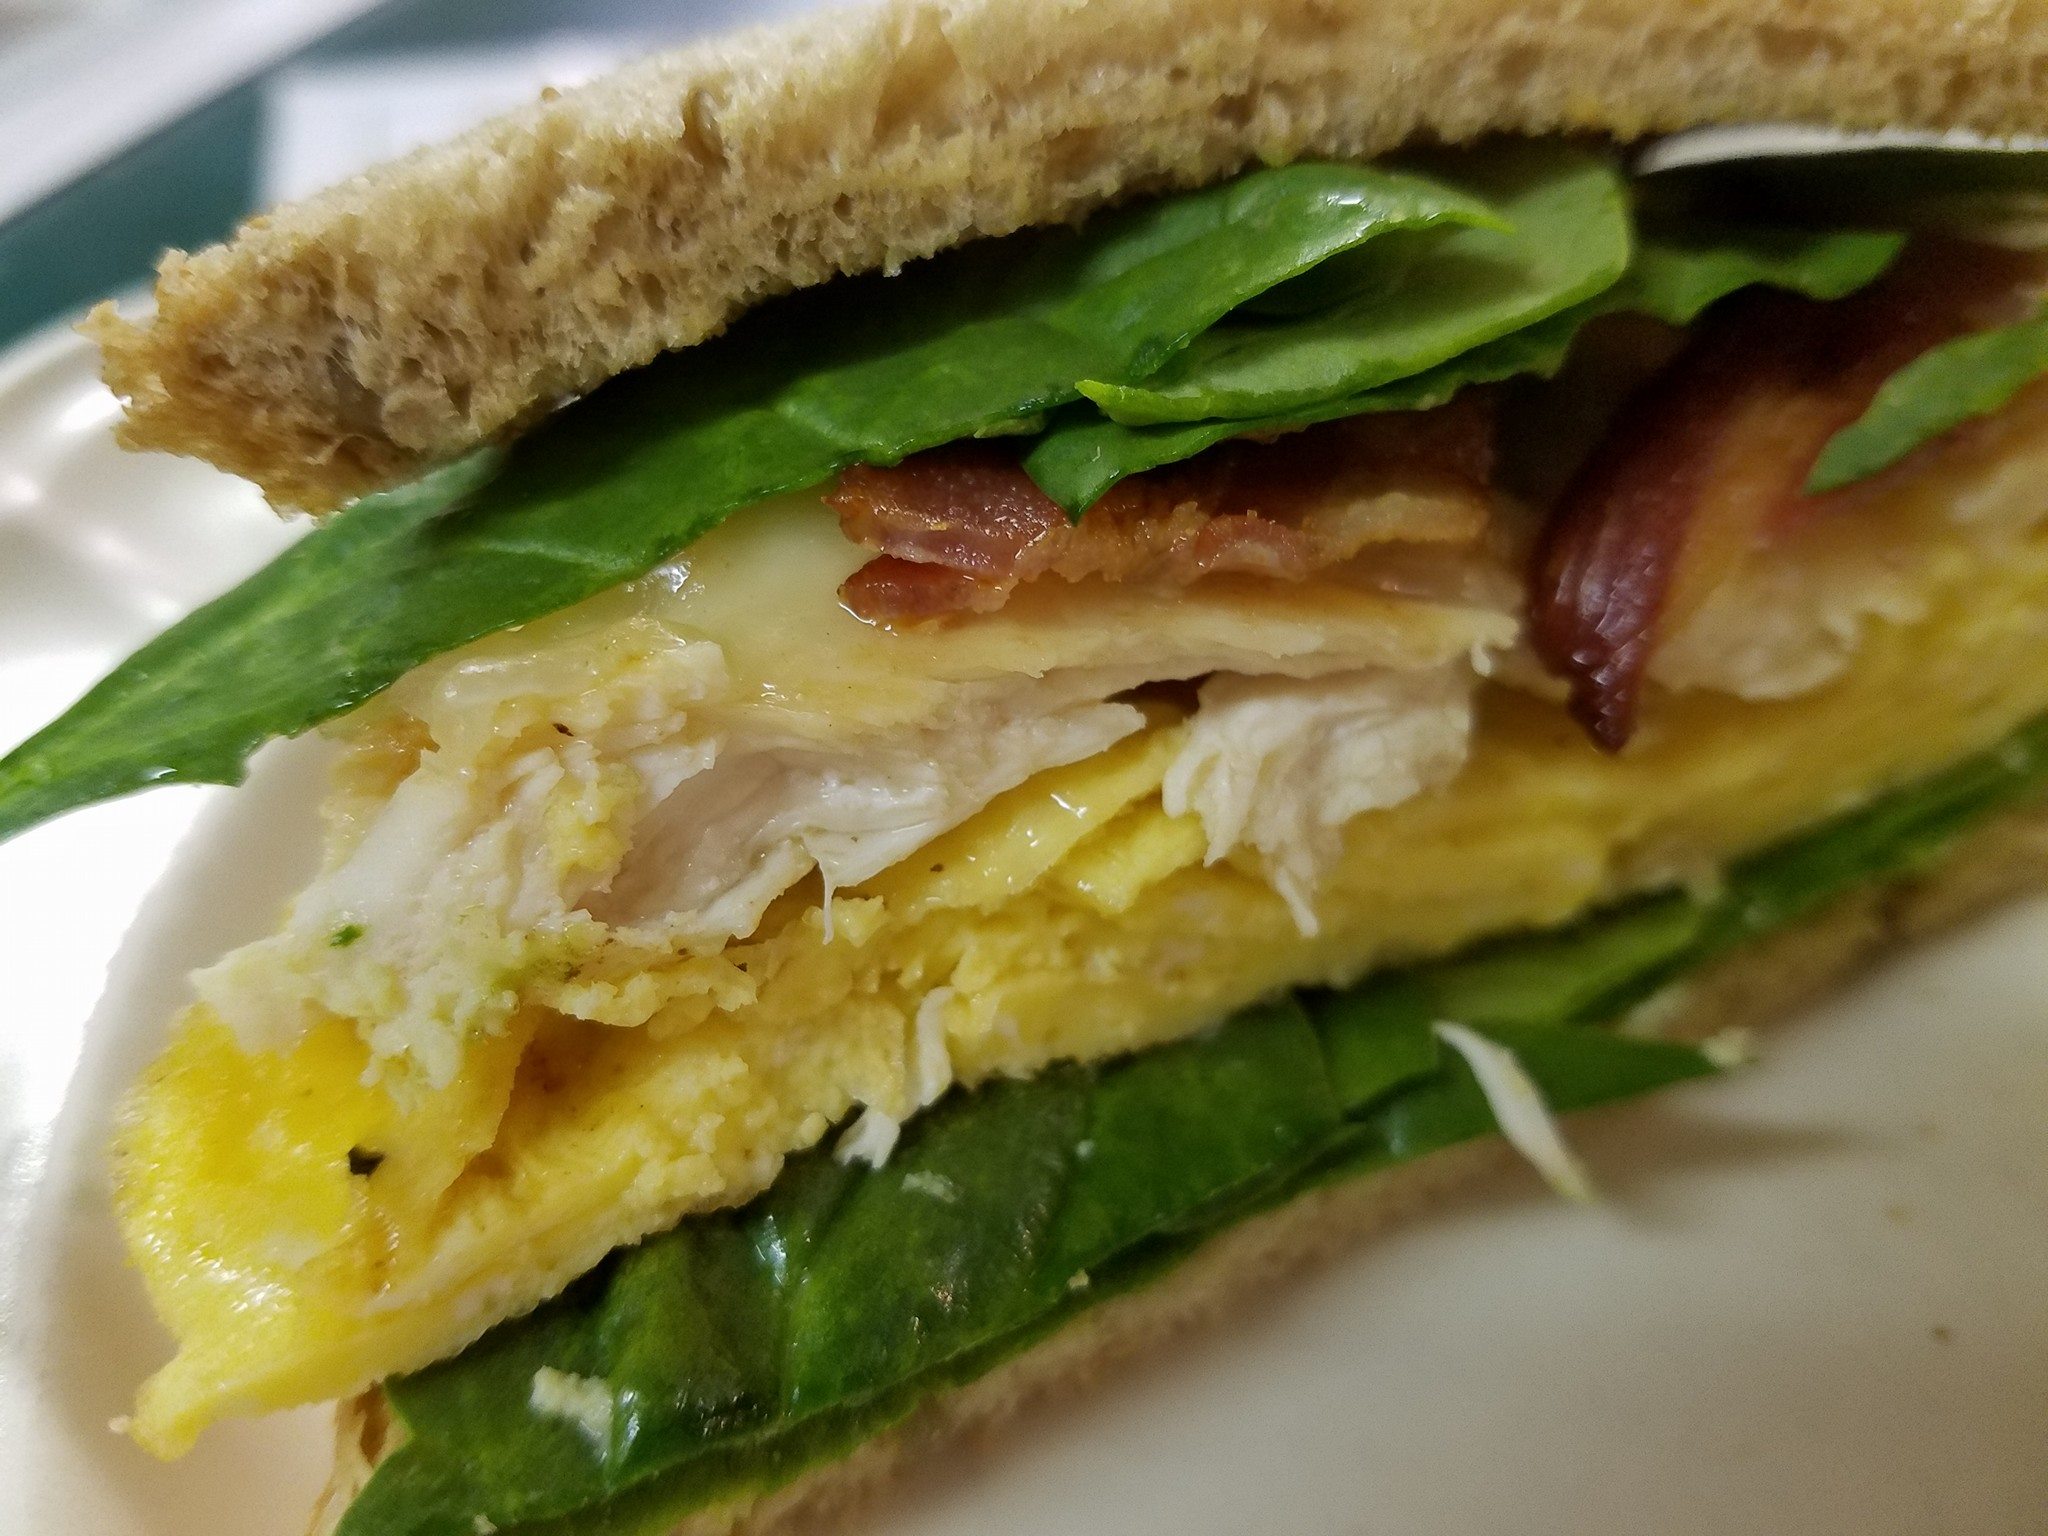 Bacon, Egg & Cheese Sandwich